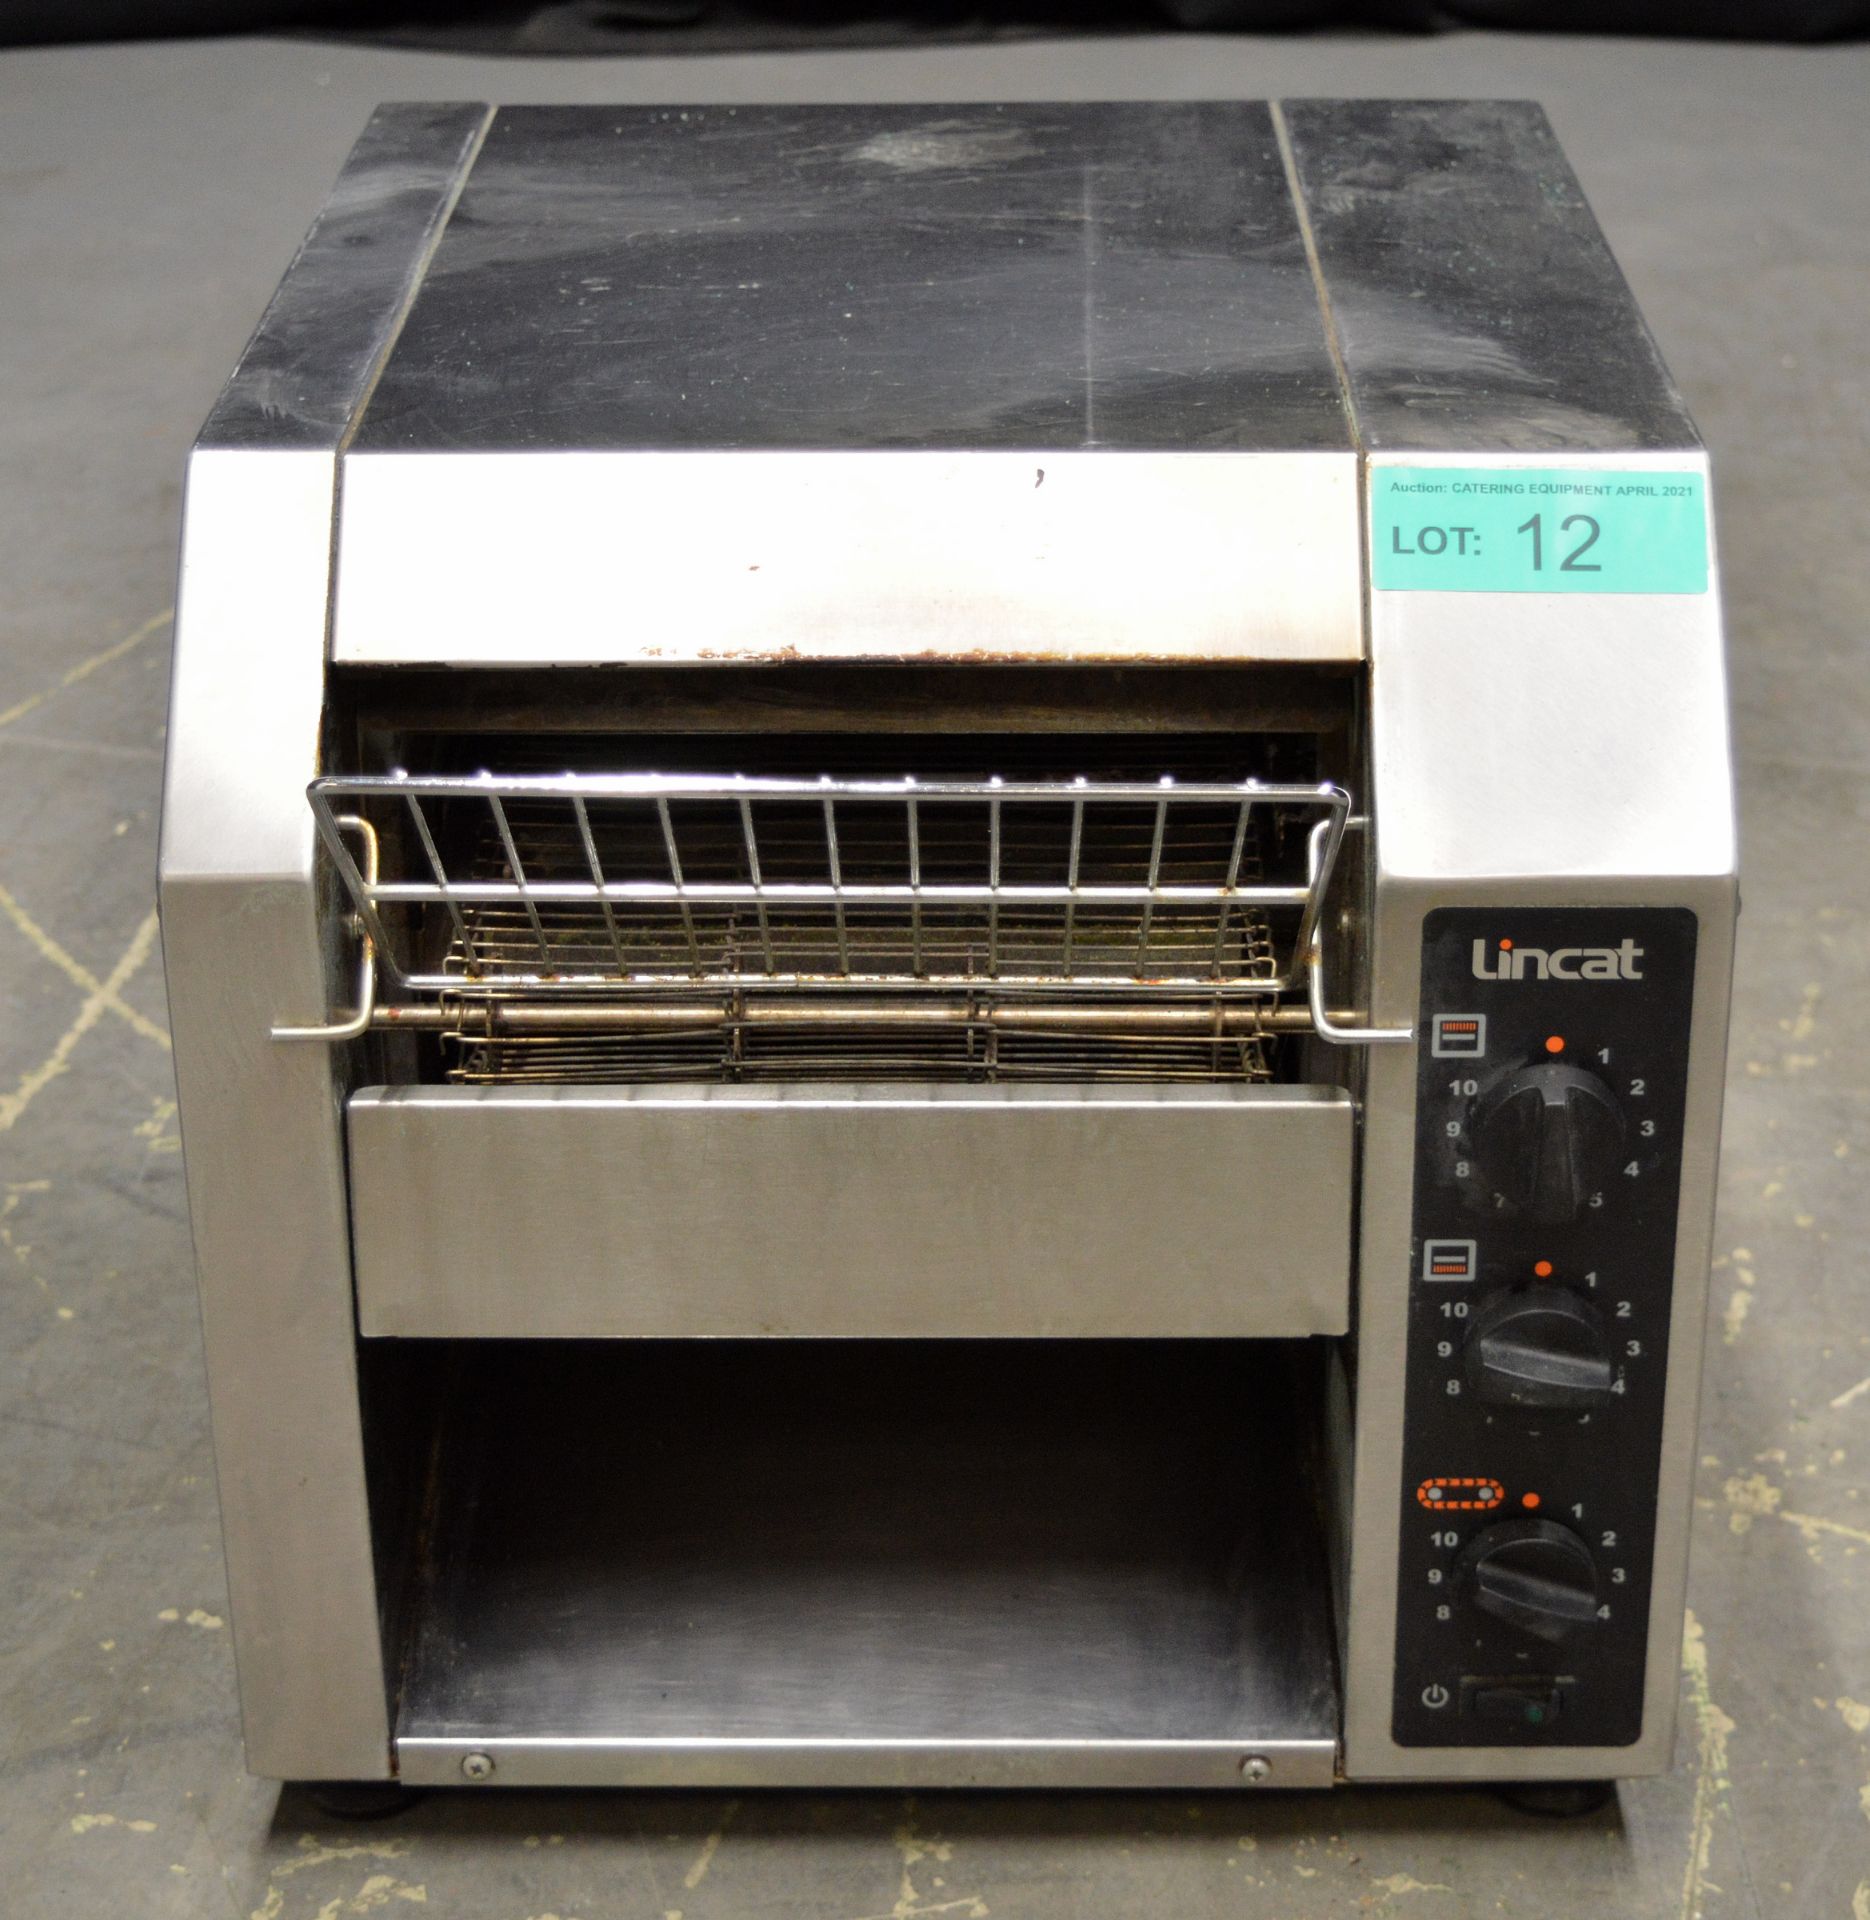 Lincat CT1 Conveyor Toaster, single phase electric